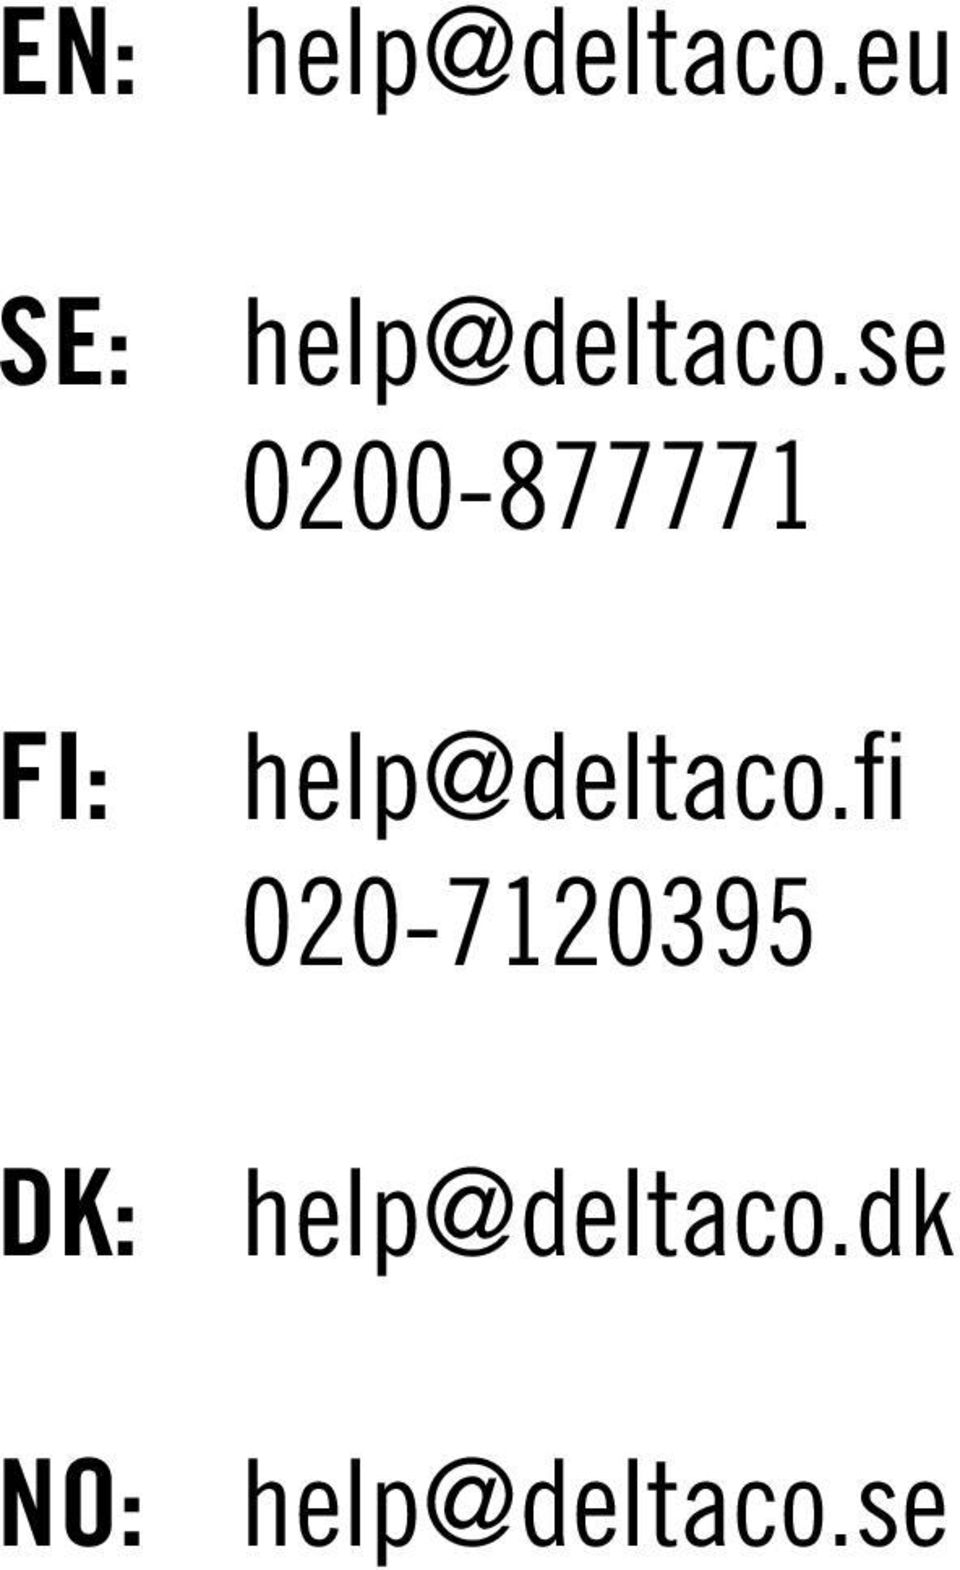 se 0200-877771 help@deltaco.